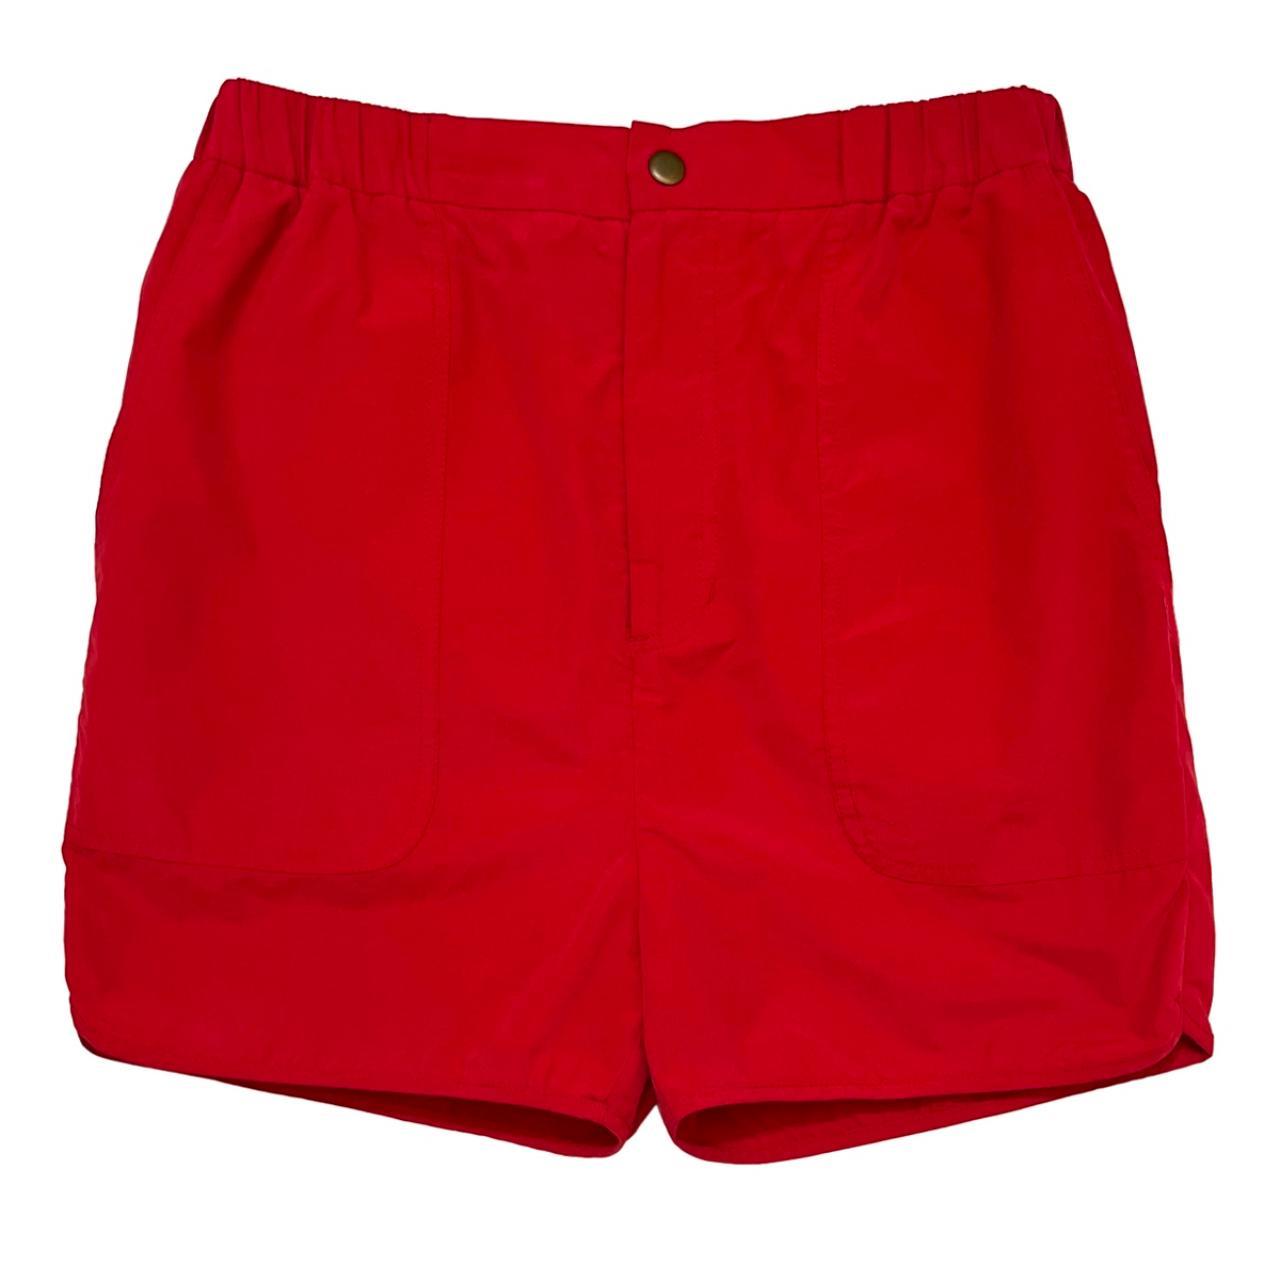 Product Image 1 - Henrik Vibskov Elastic-Waist Drop-Crotch Shorts

New